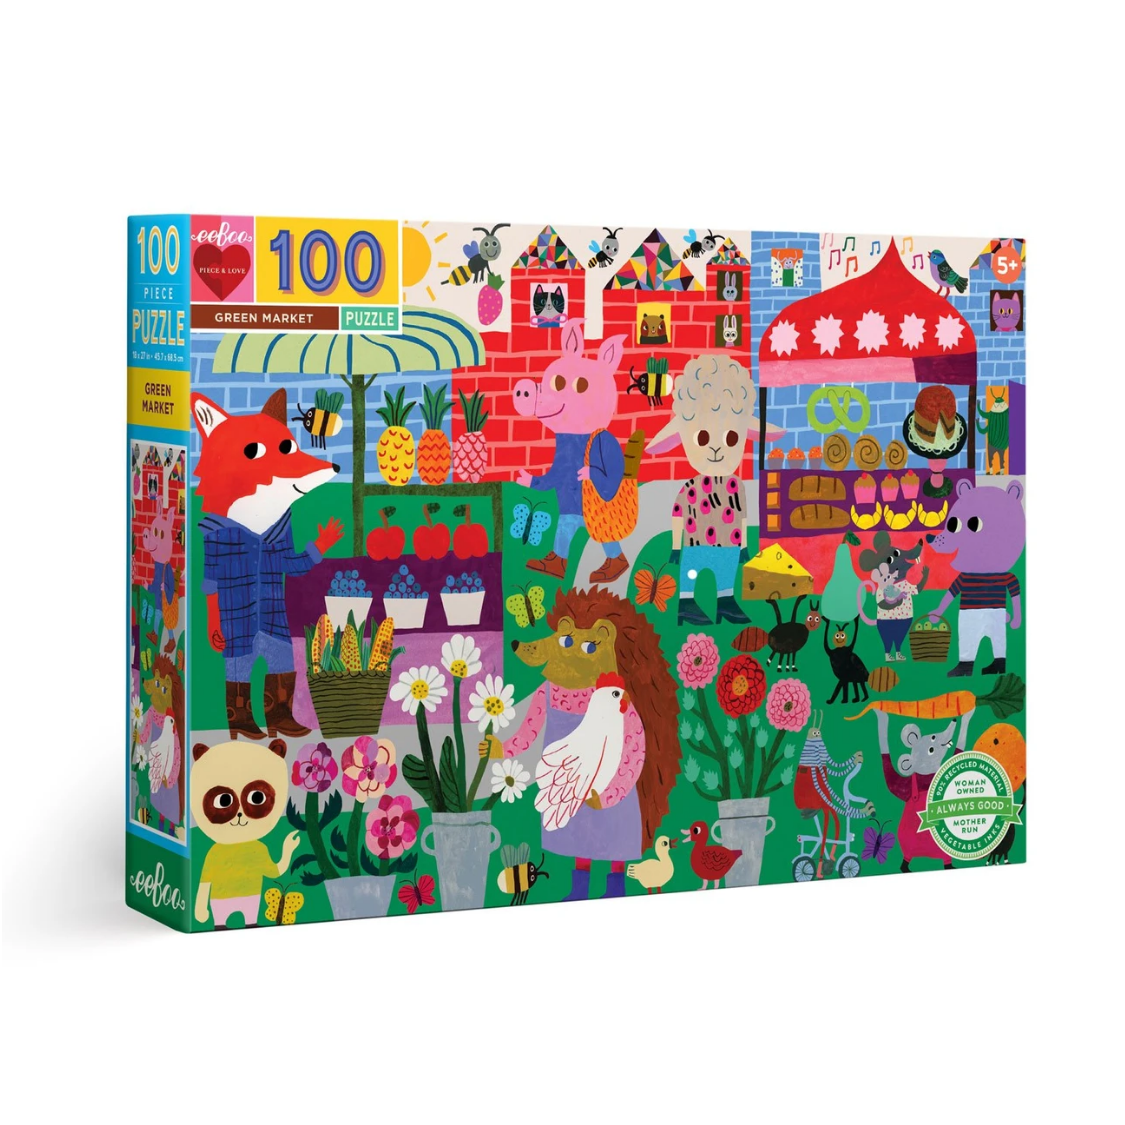 Green Market 100 Pc Puzzle